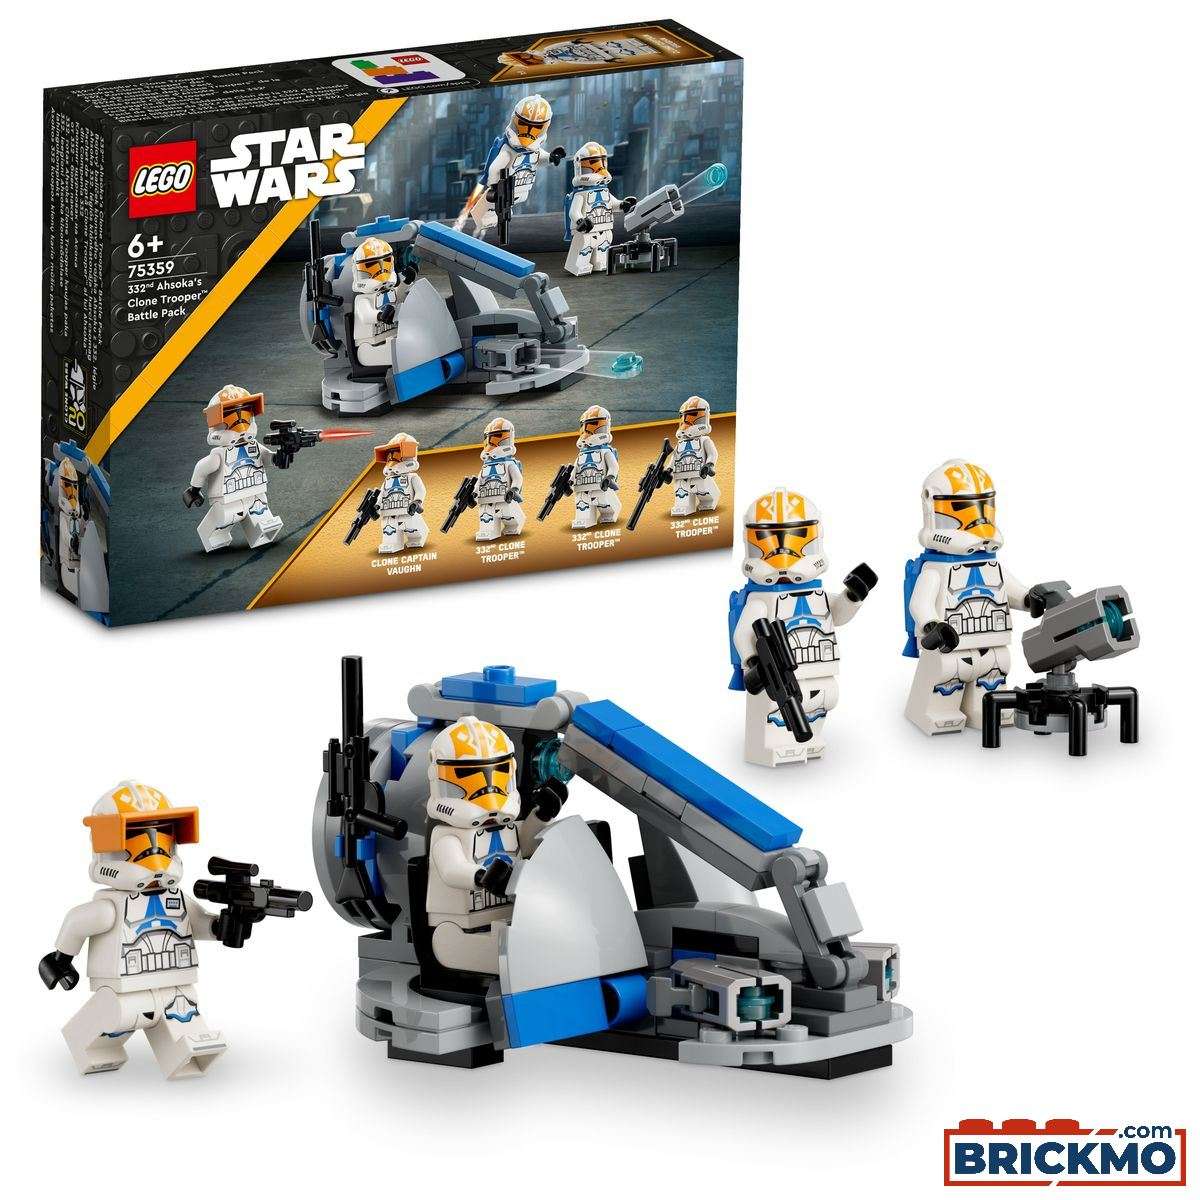 LEGO Star Wars 75359 Ahsokas Clone Trooper der 332. Kompanie – Battle Pack 75359